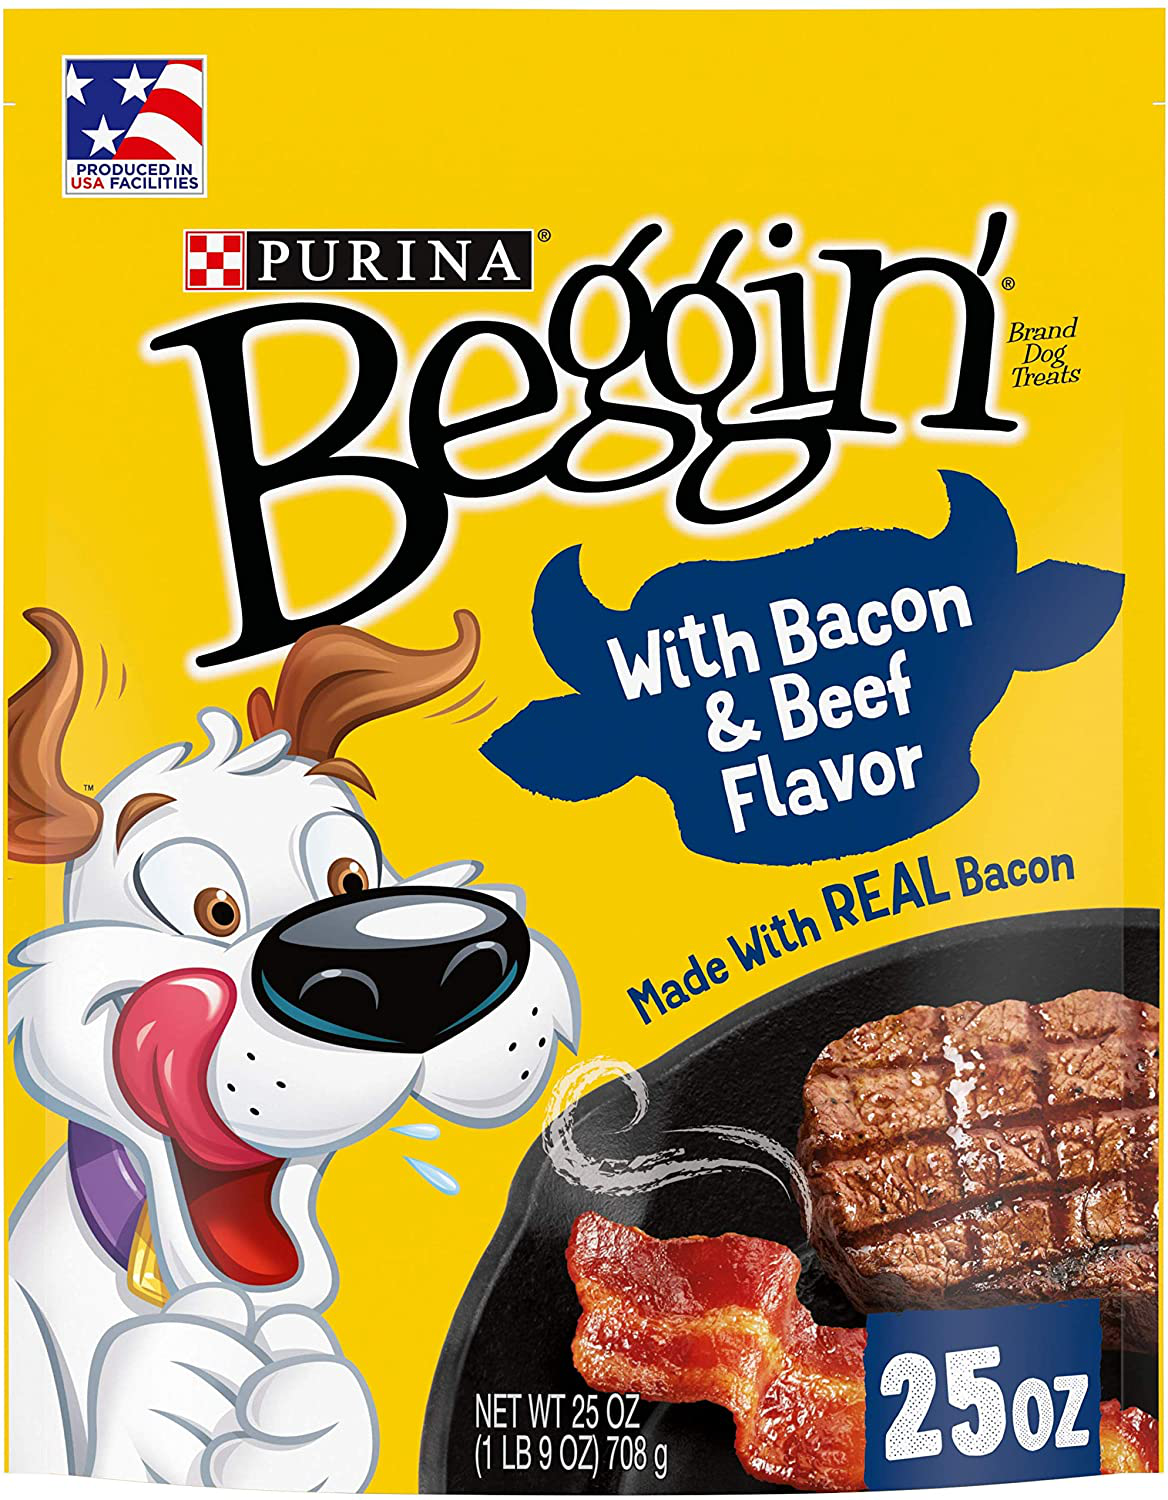 PURINA Beggin' Strips Bacon & Beef Dog Treats Made in USA Facilities Adult Dog Training Treats Animals & Pet Supplies > Pet Supplies > Dog Supplies > Dog Treats Purina Beggin' Bacon & Beef (4) 25 oz. Pouches 